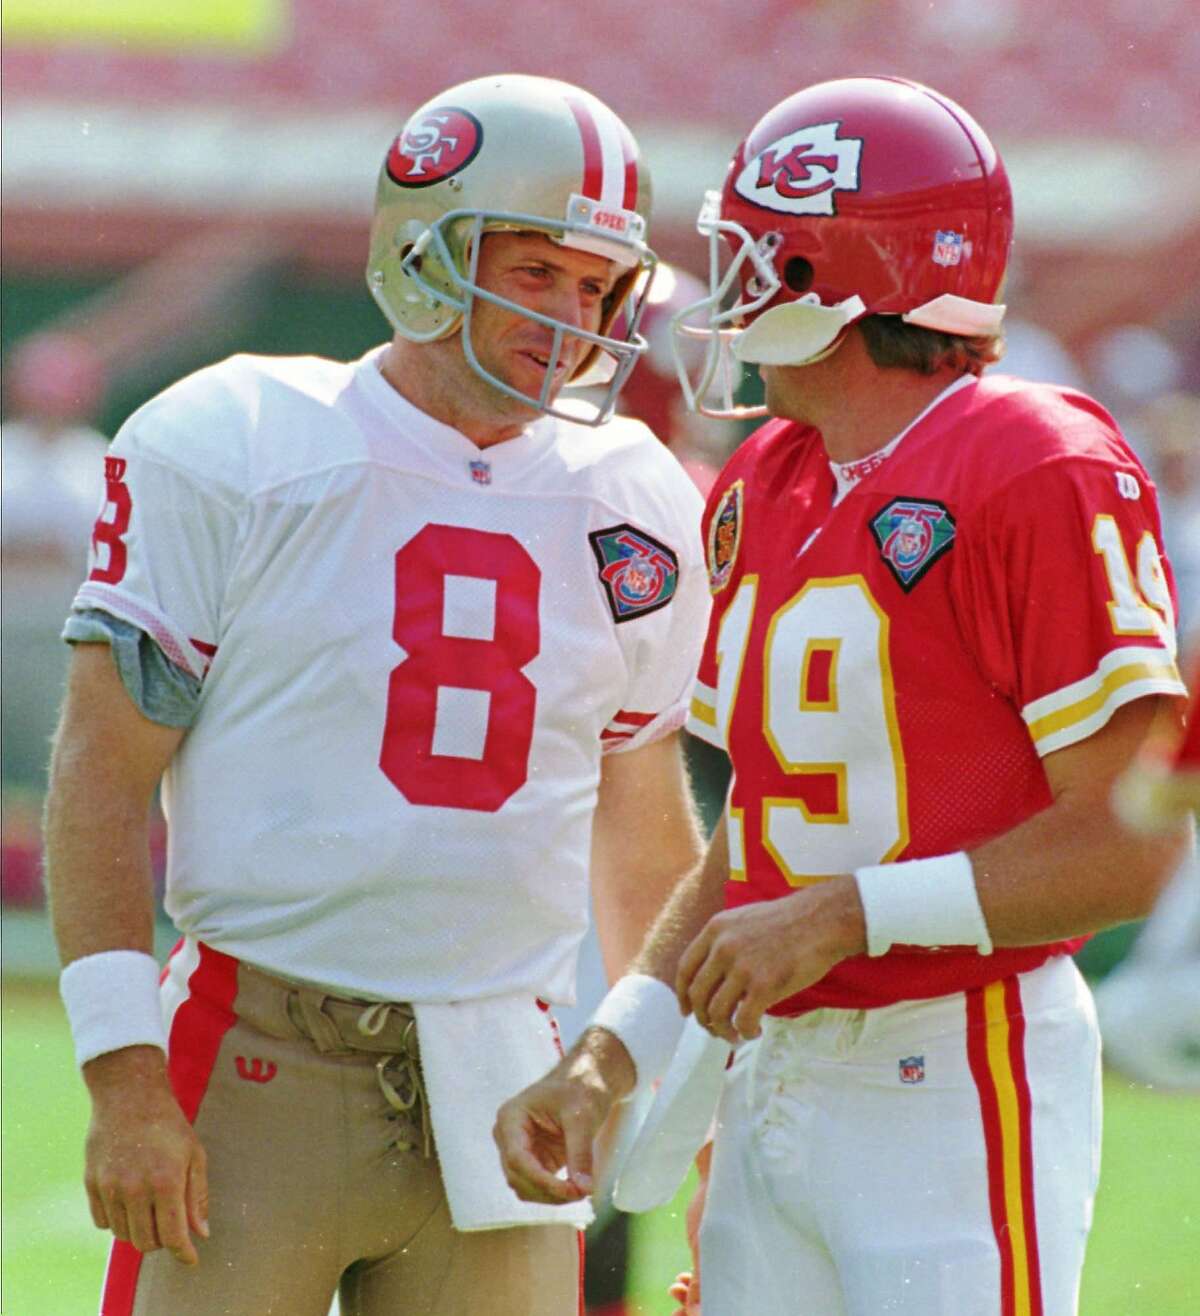 When Steve Young met Joe Montana: the super-hyped '94 49ers-Chiefs matchup